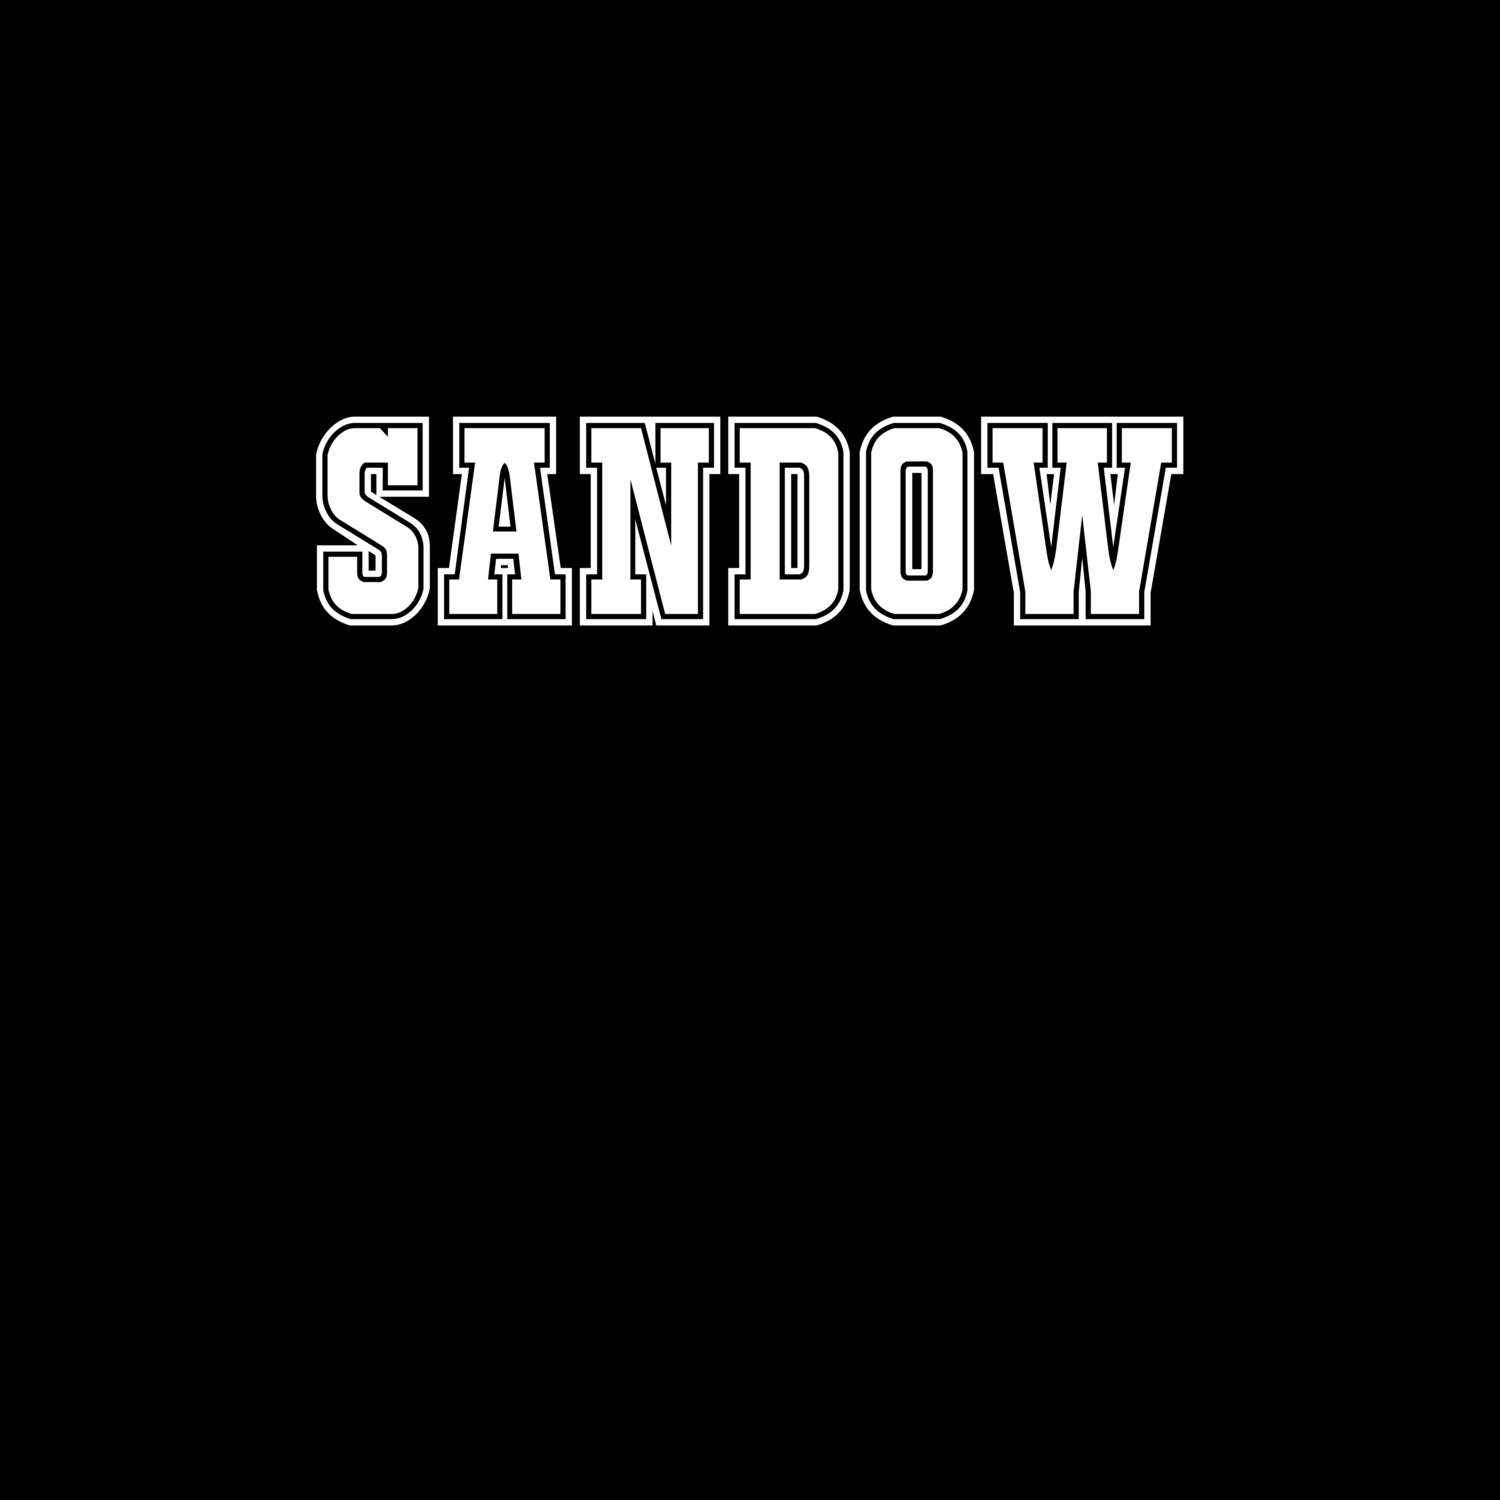 Sandow T-Shirt »Classic«